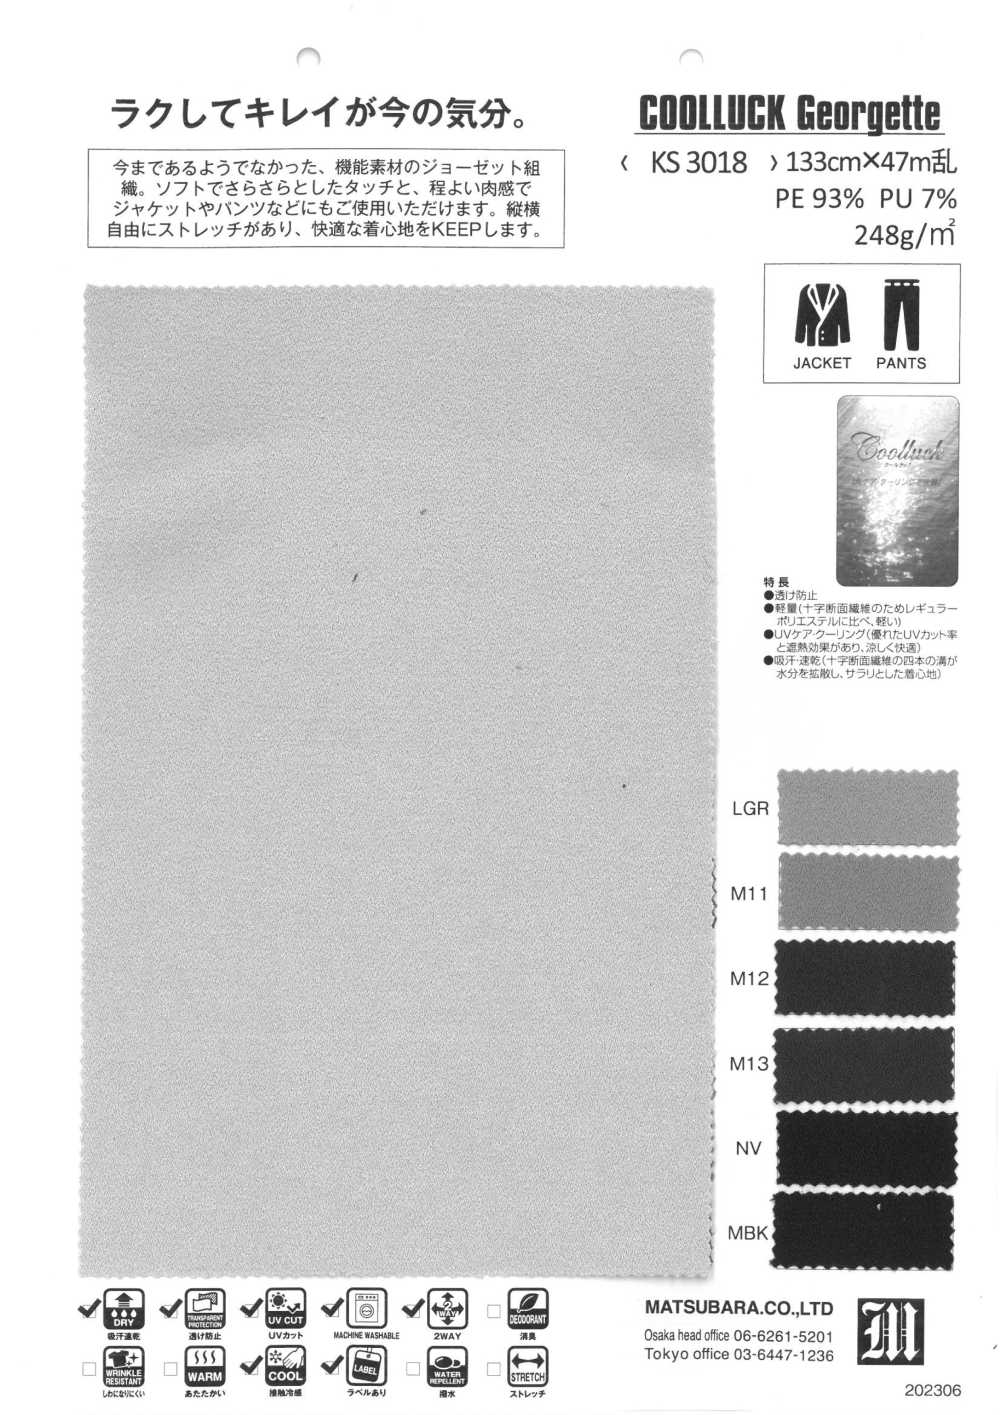 KS3018 COOLLUCK Georgette[Textile / Fabric] Matsubara